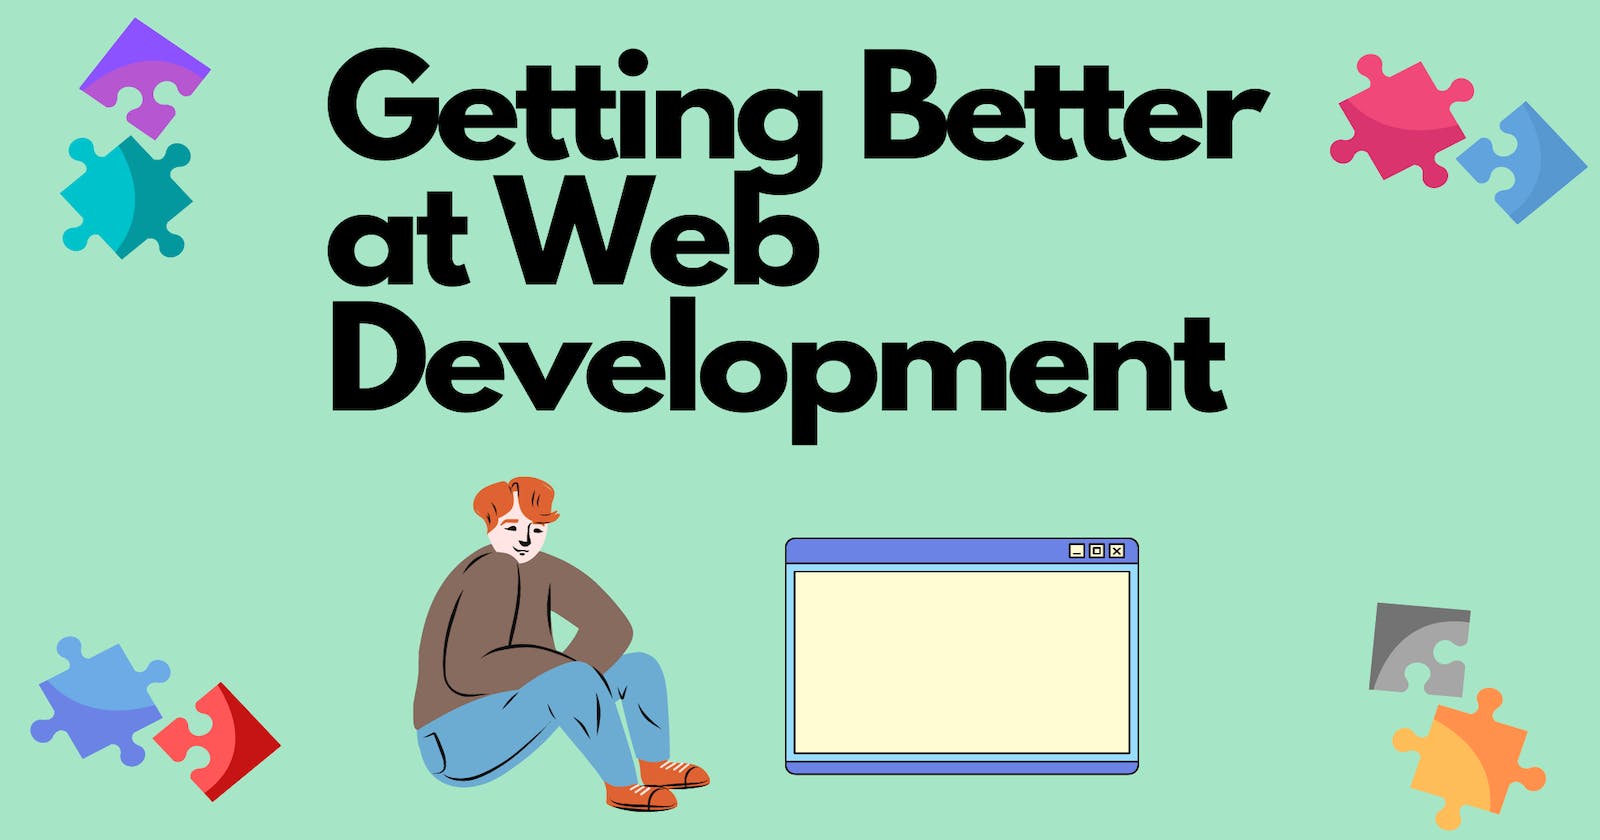 Getting Better at Web Development